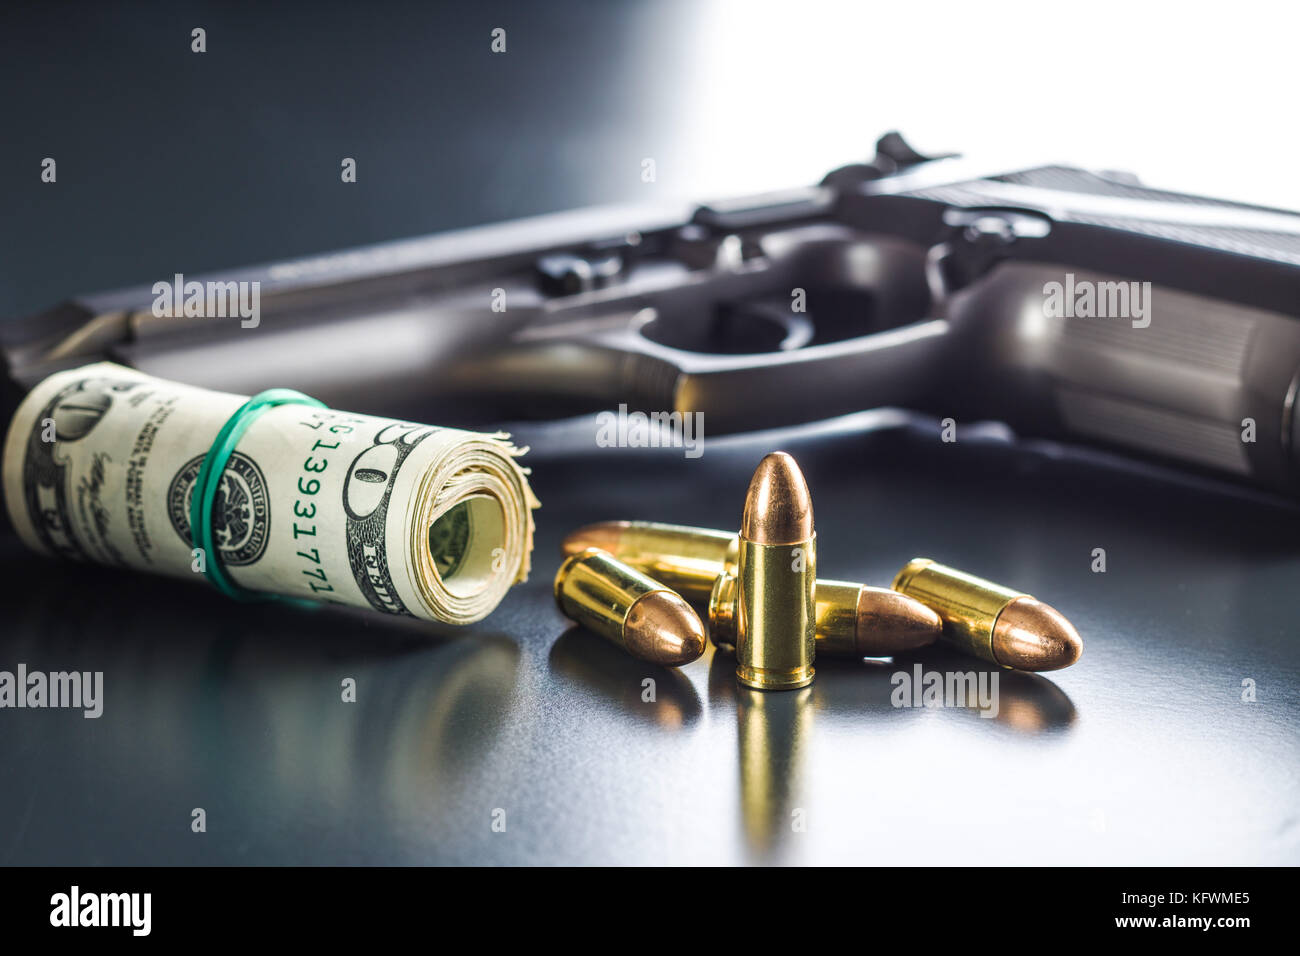 9mm bullets, american dollars and handgun. Stock Photo